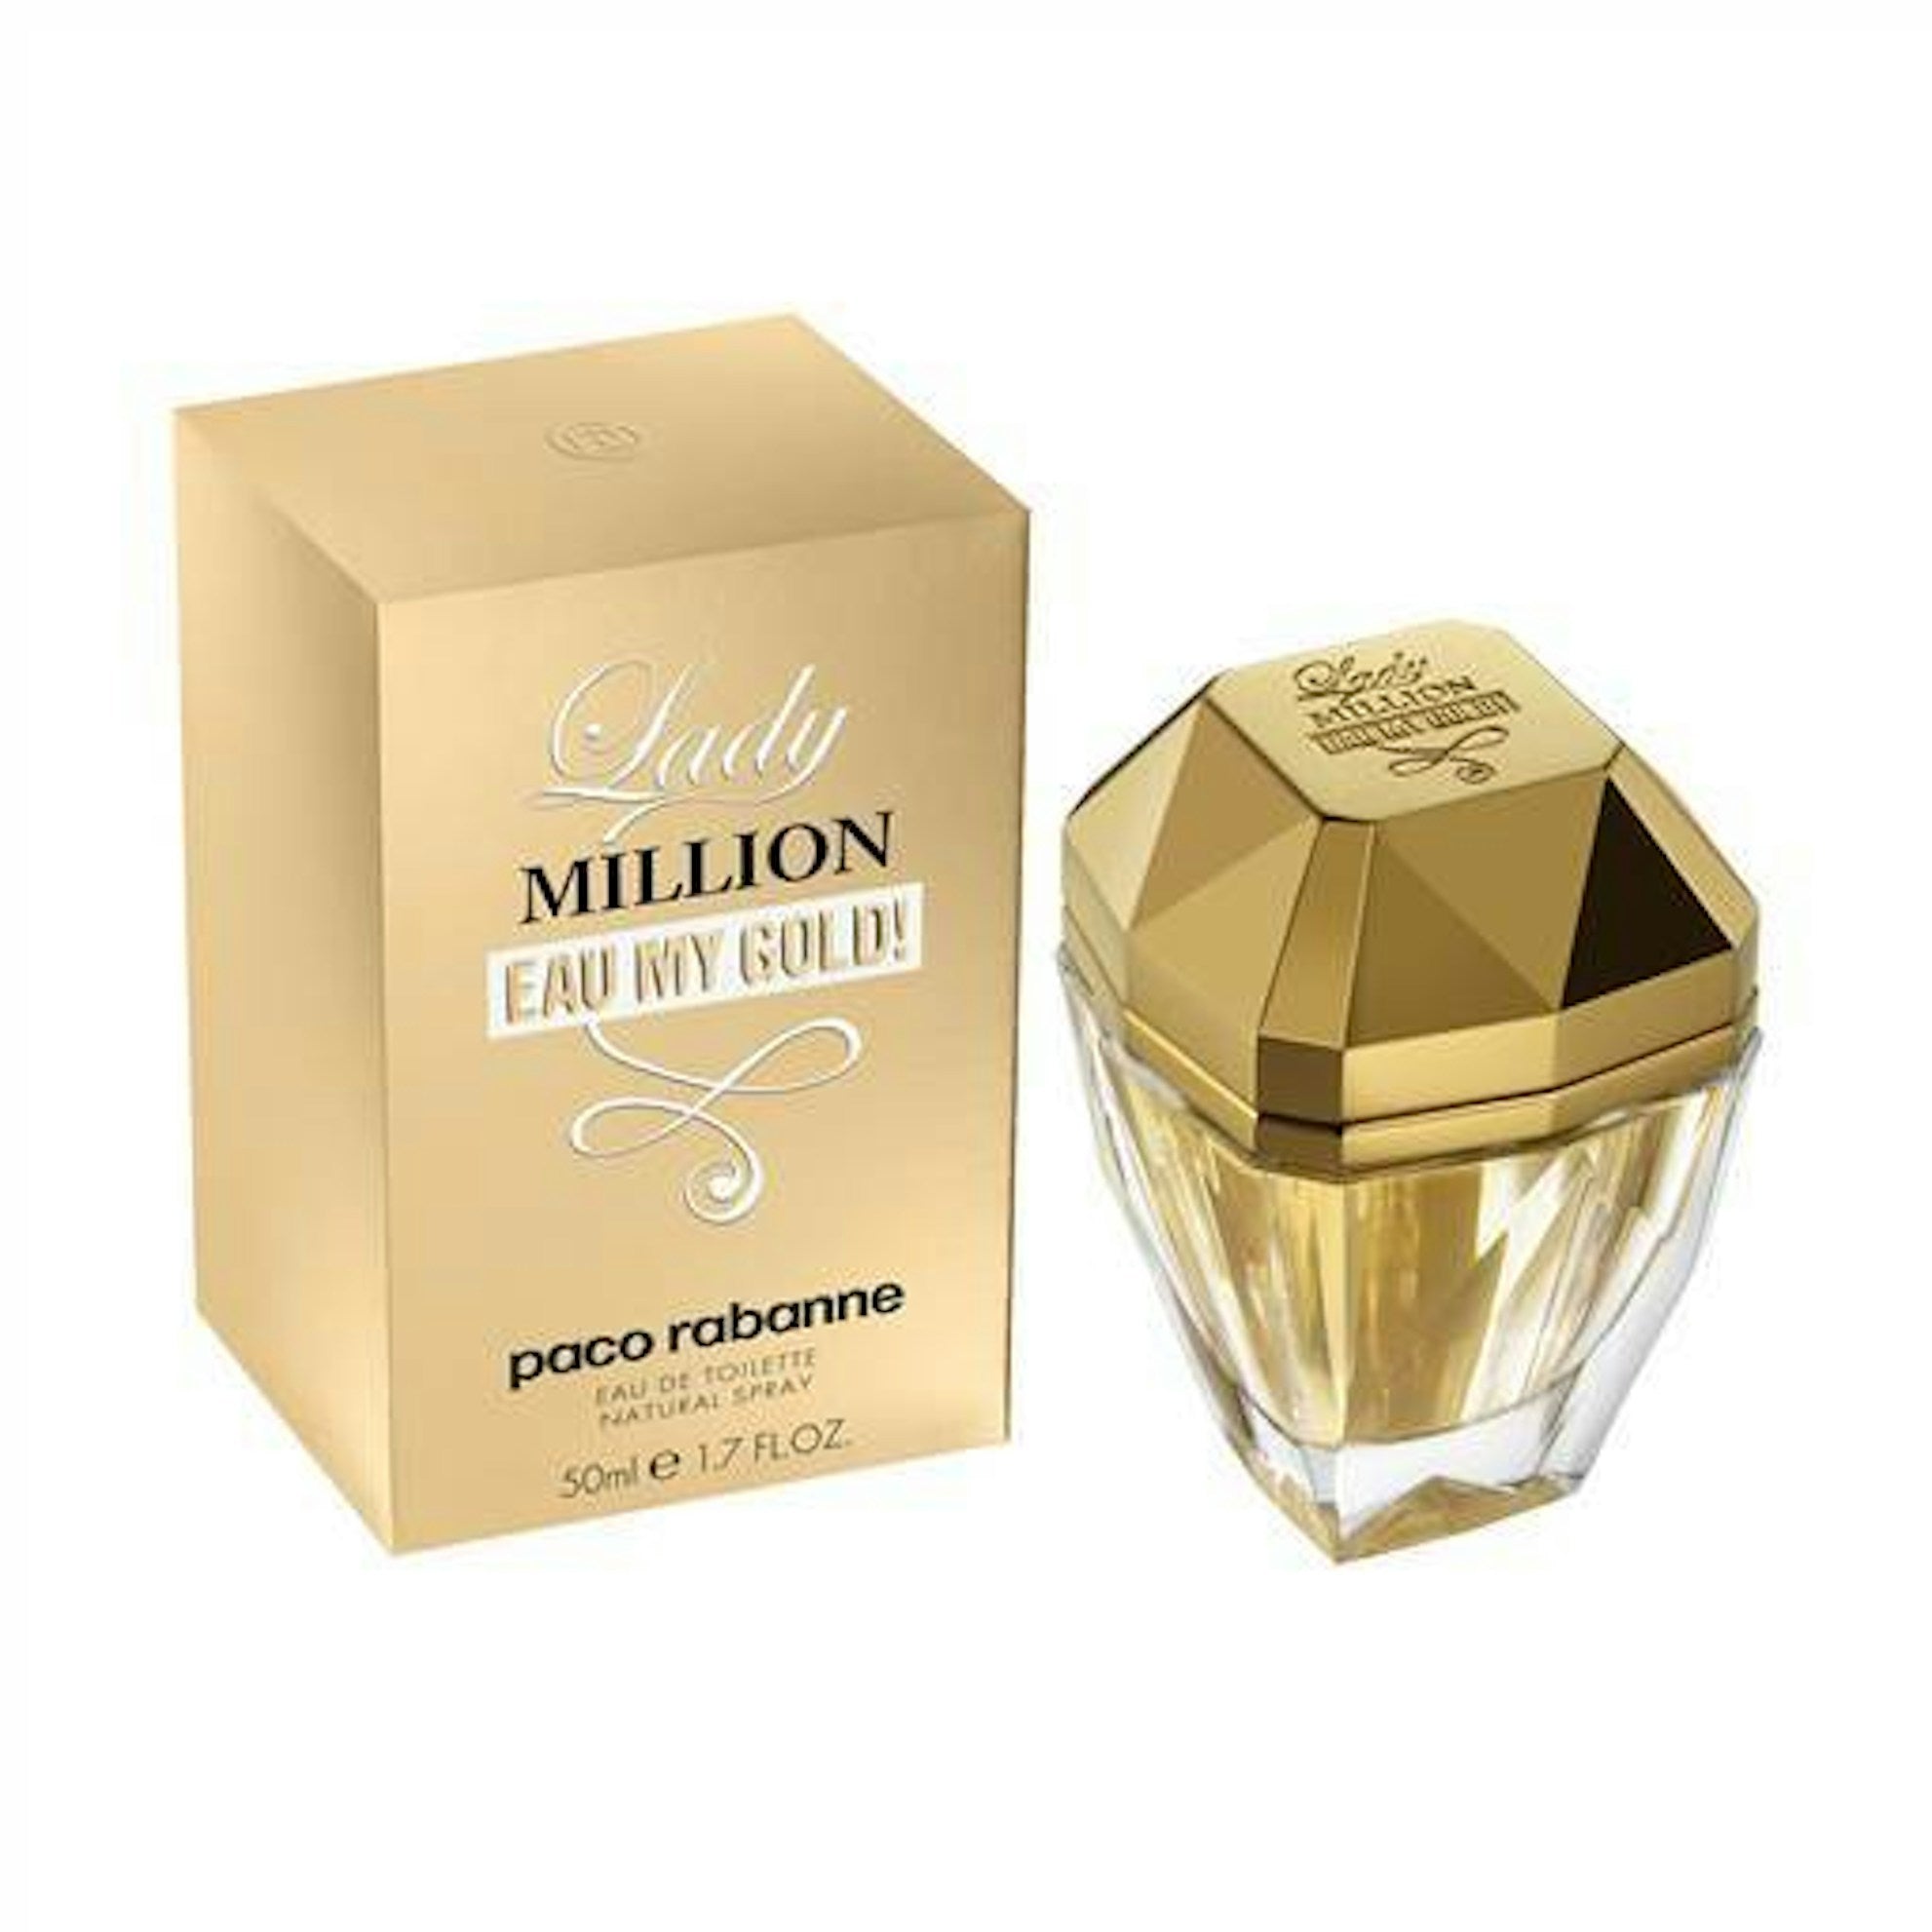 Lady Million Eau My Gold! By Paco Rabanne For Women 1.7 oz EDT Spray